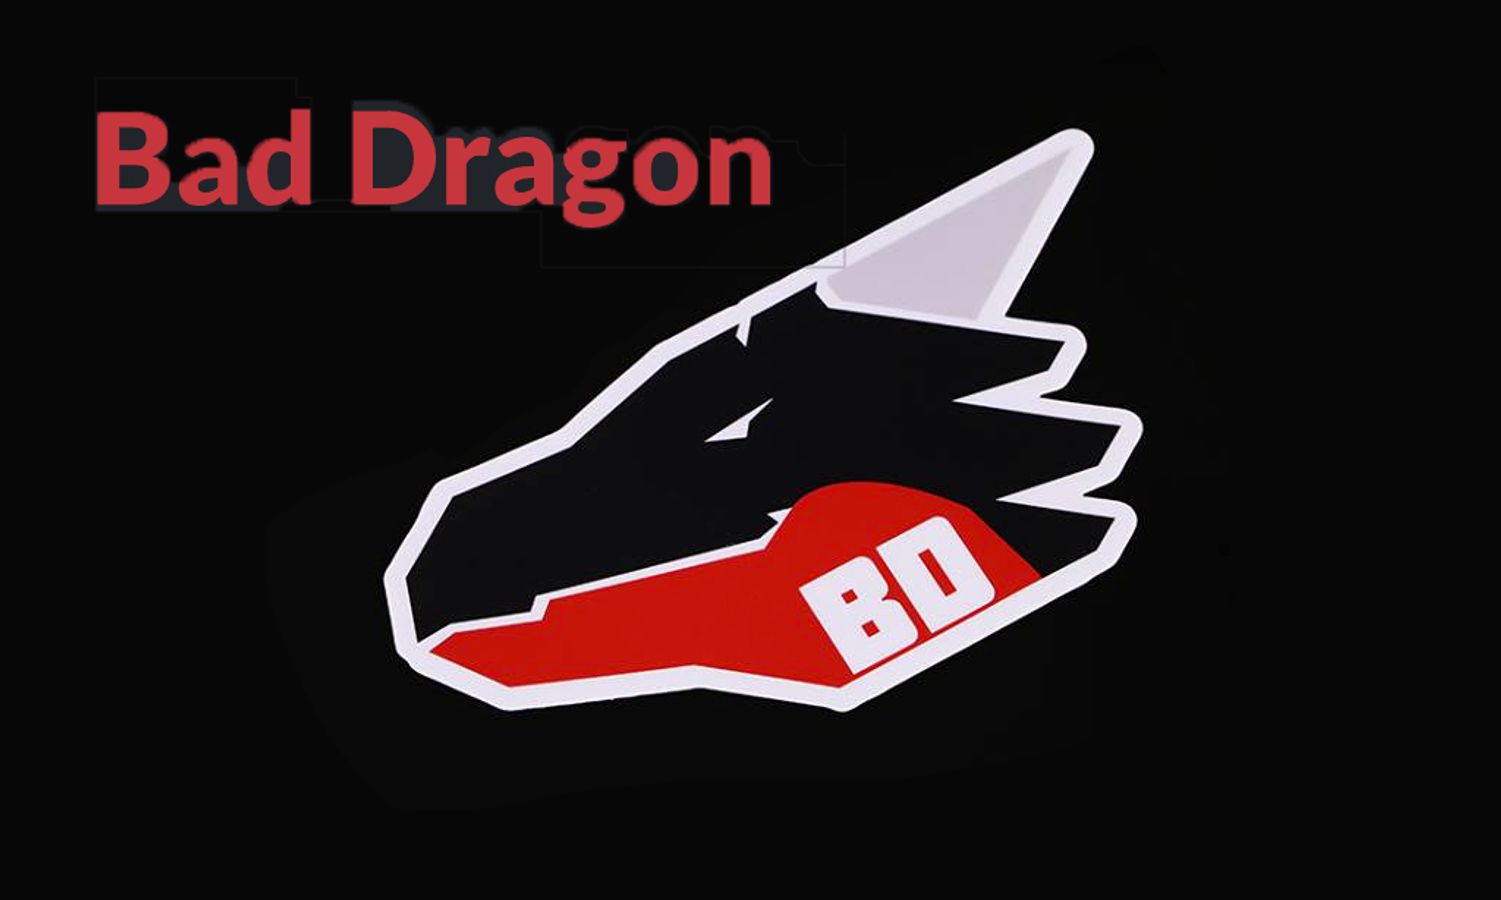 Bad Dragon Enterprises